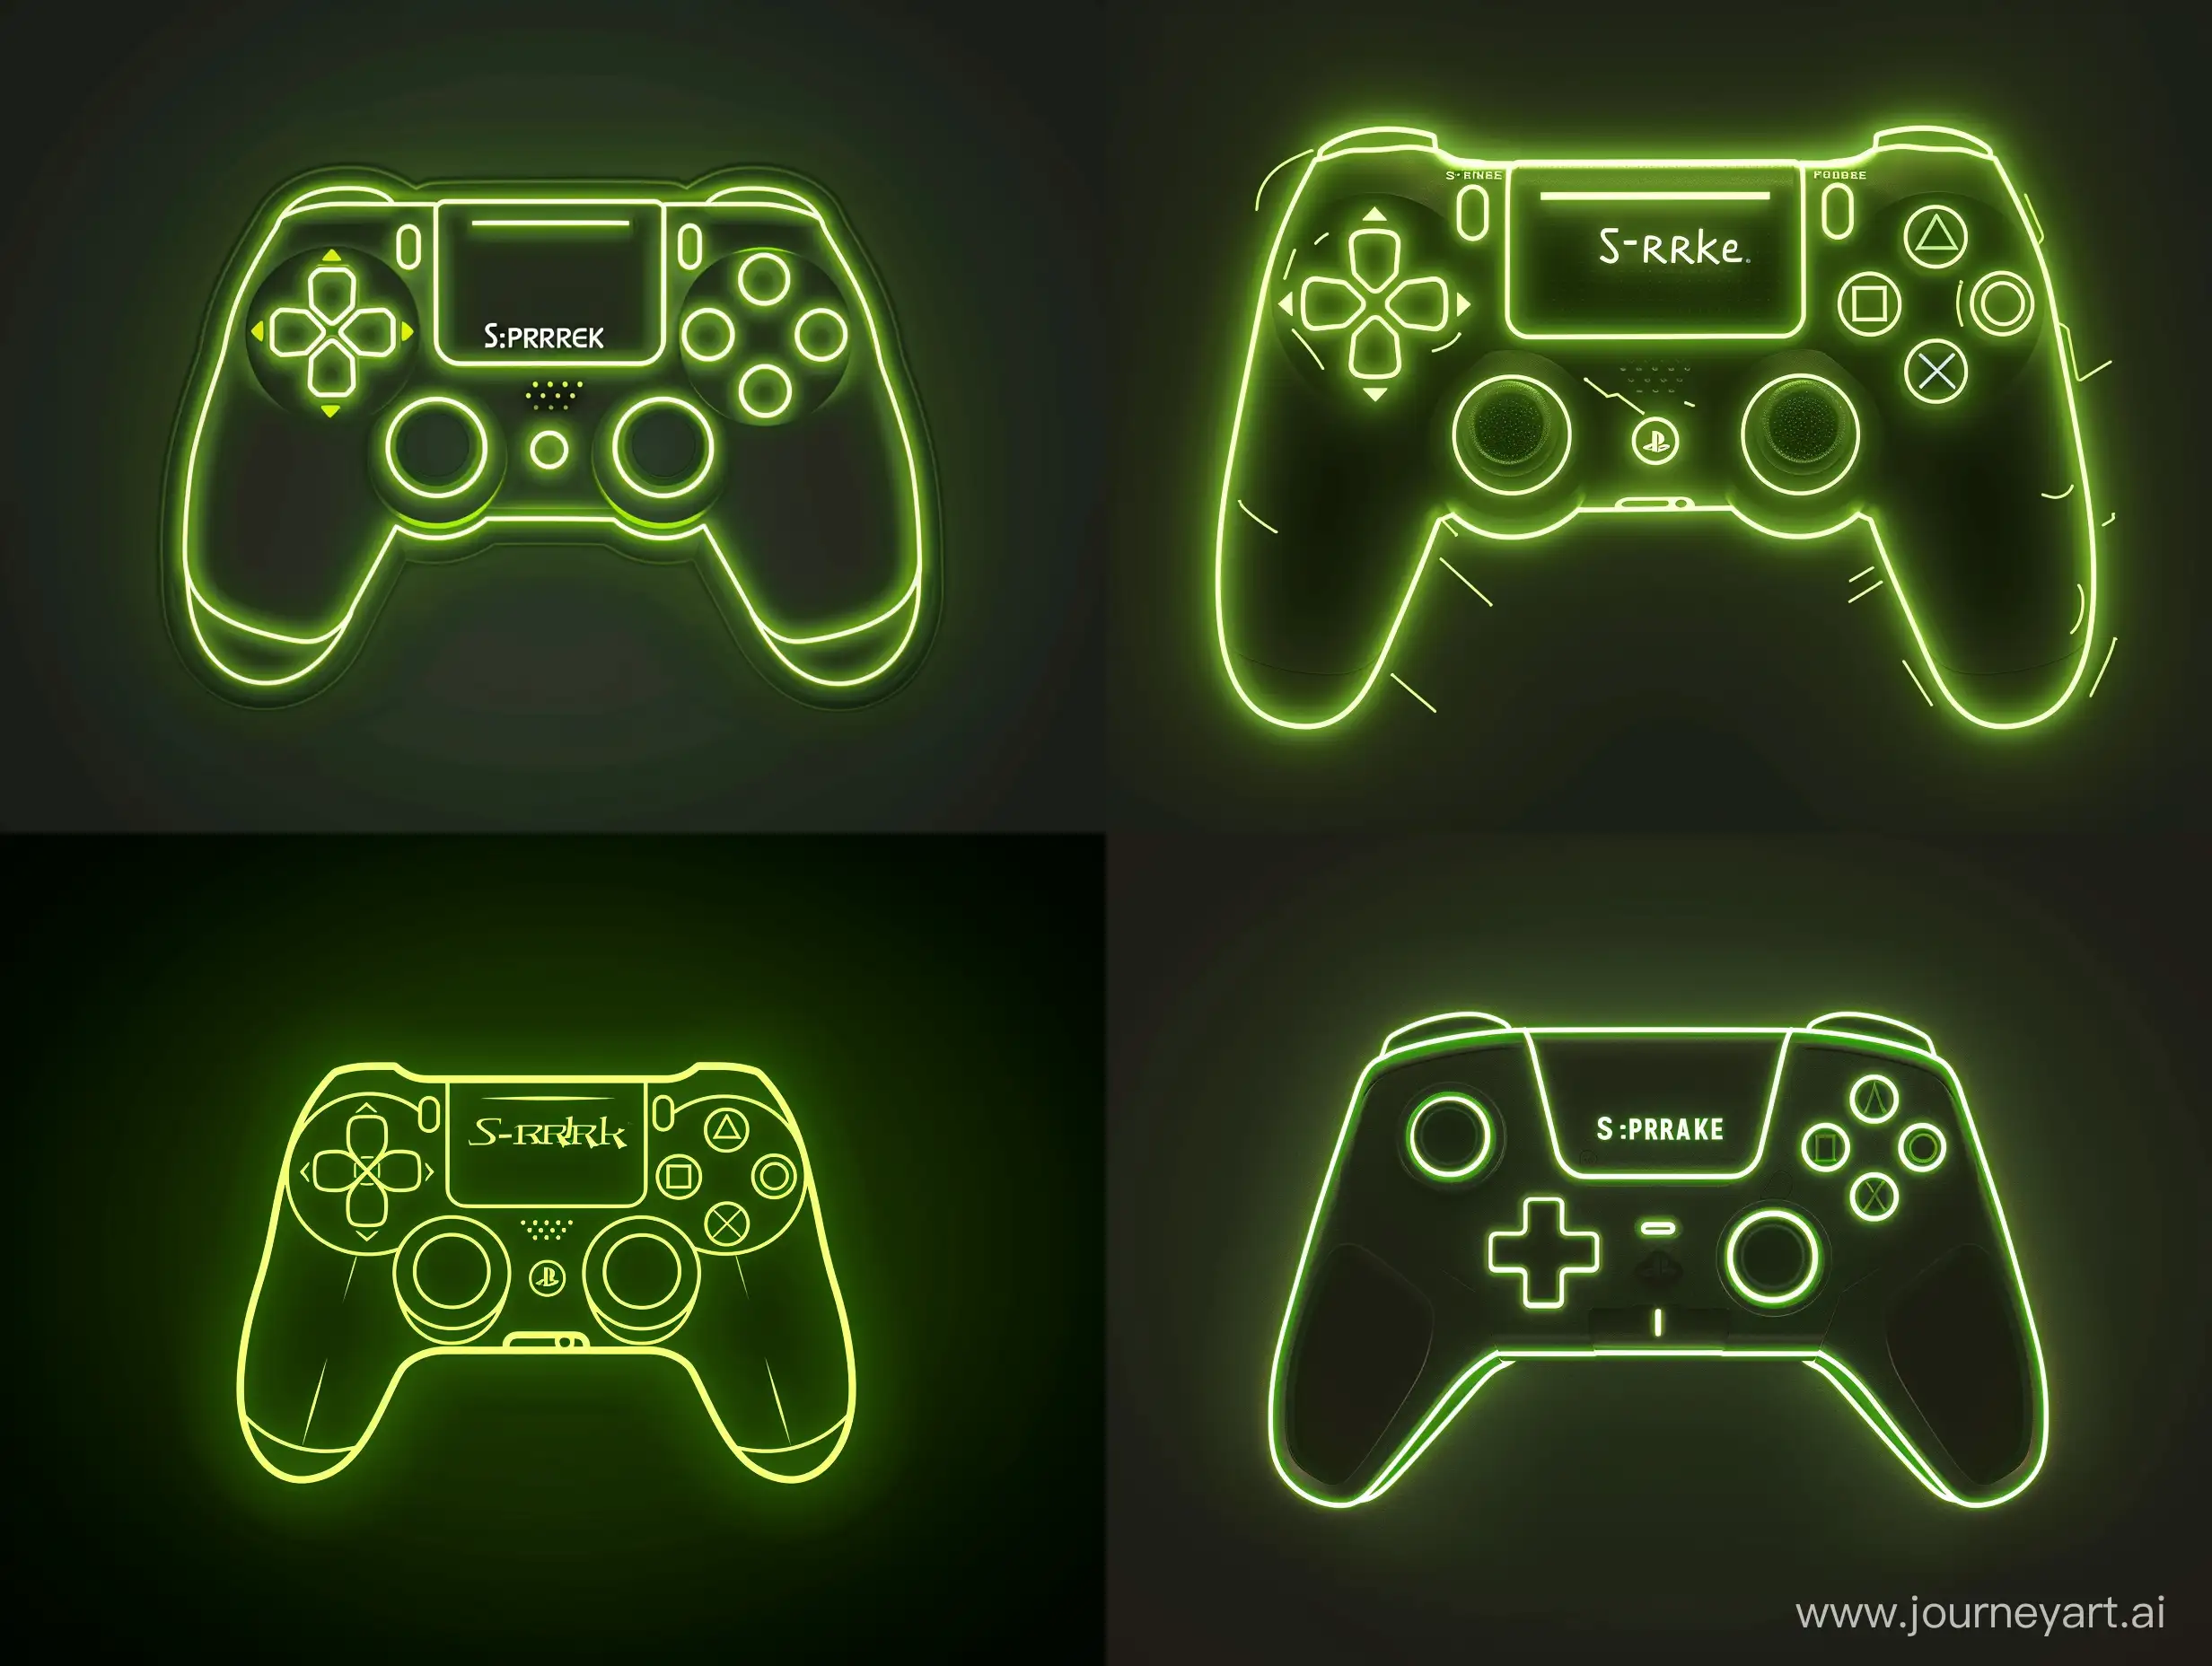 Glowing-Neon-Gamepad-with-SBrake-Channel-Name